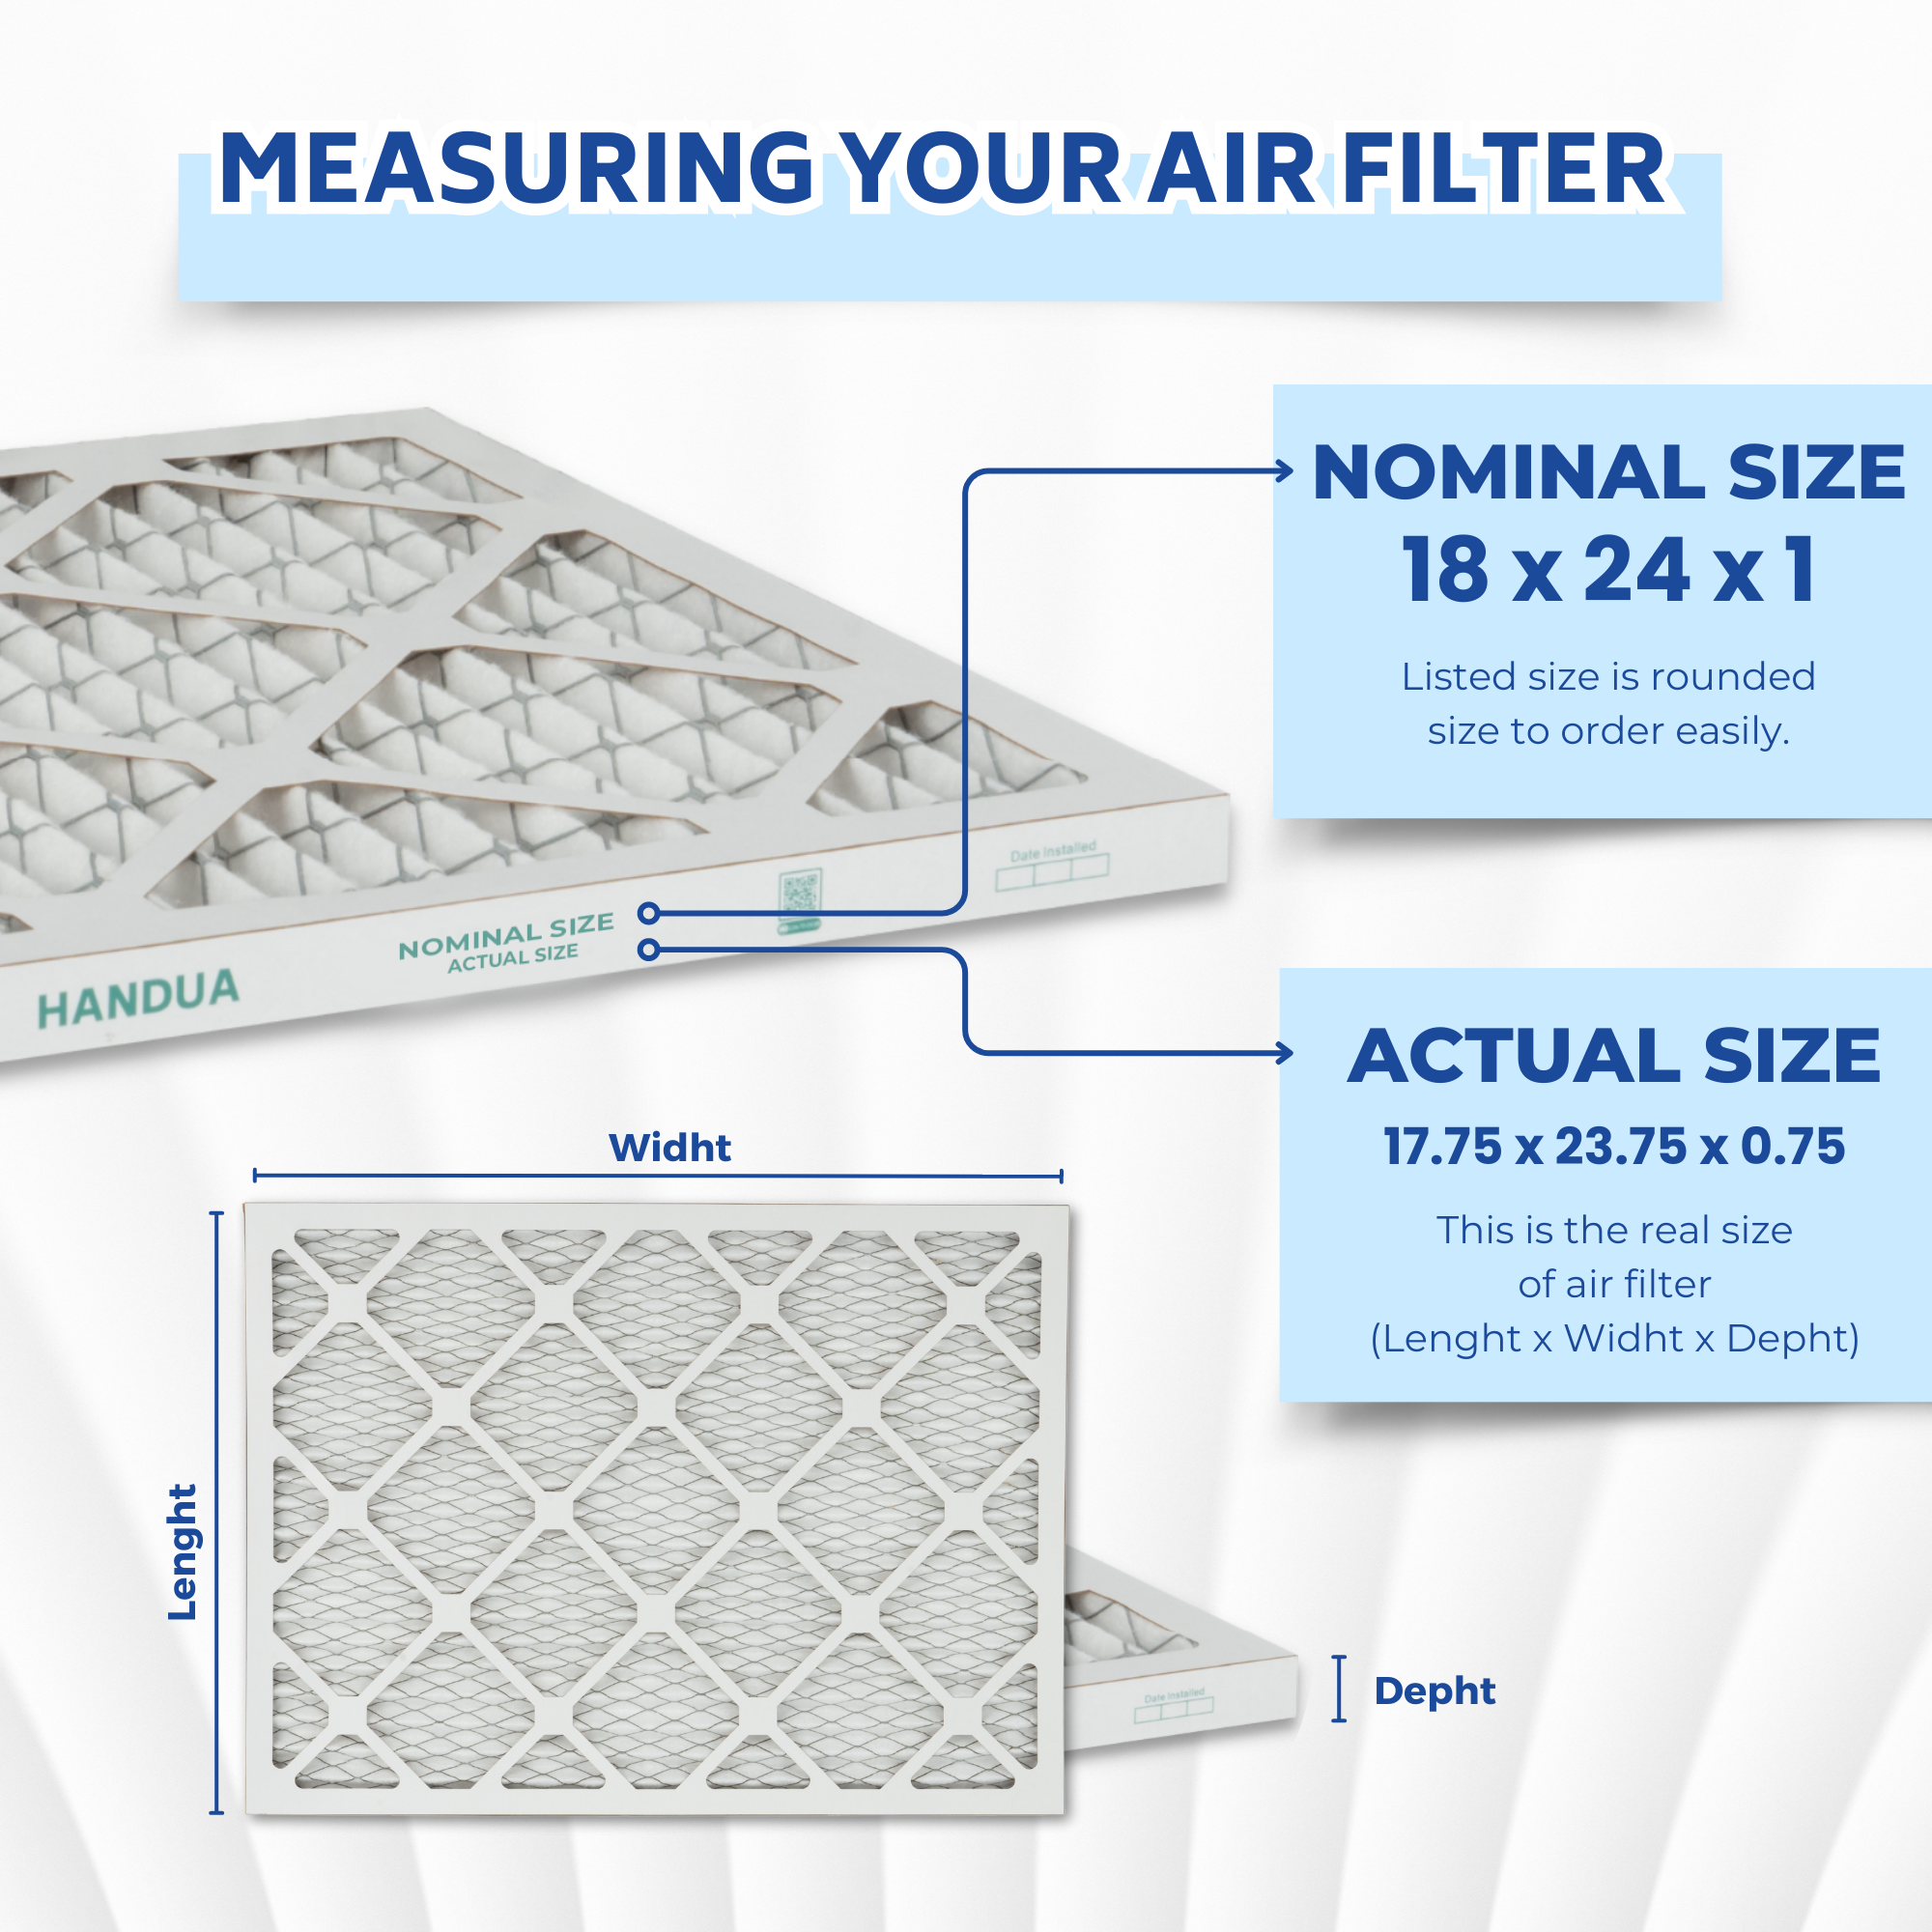 Handua 18x24x1 Air Filter MERV 13 Optimal Control, Plated Furnace AC Air Replacement Filter, 4 Pack (Actual Size: 17.75" x 23.75" x 0.75")